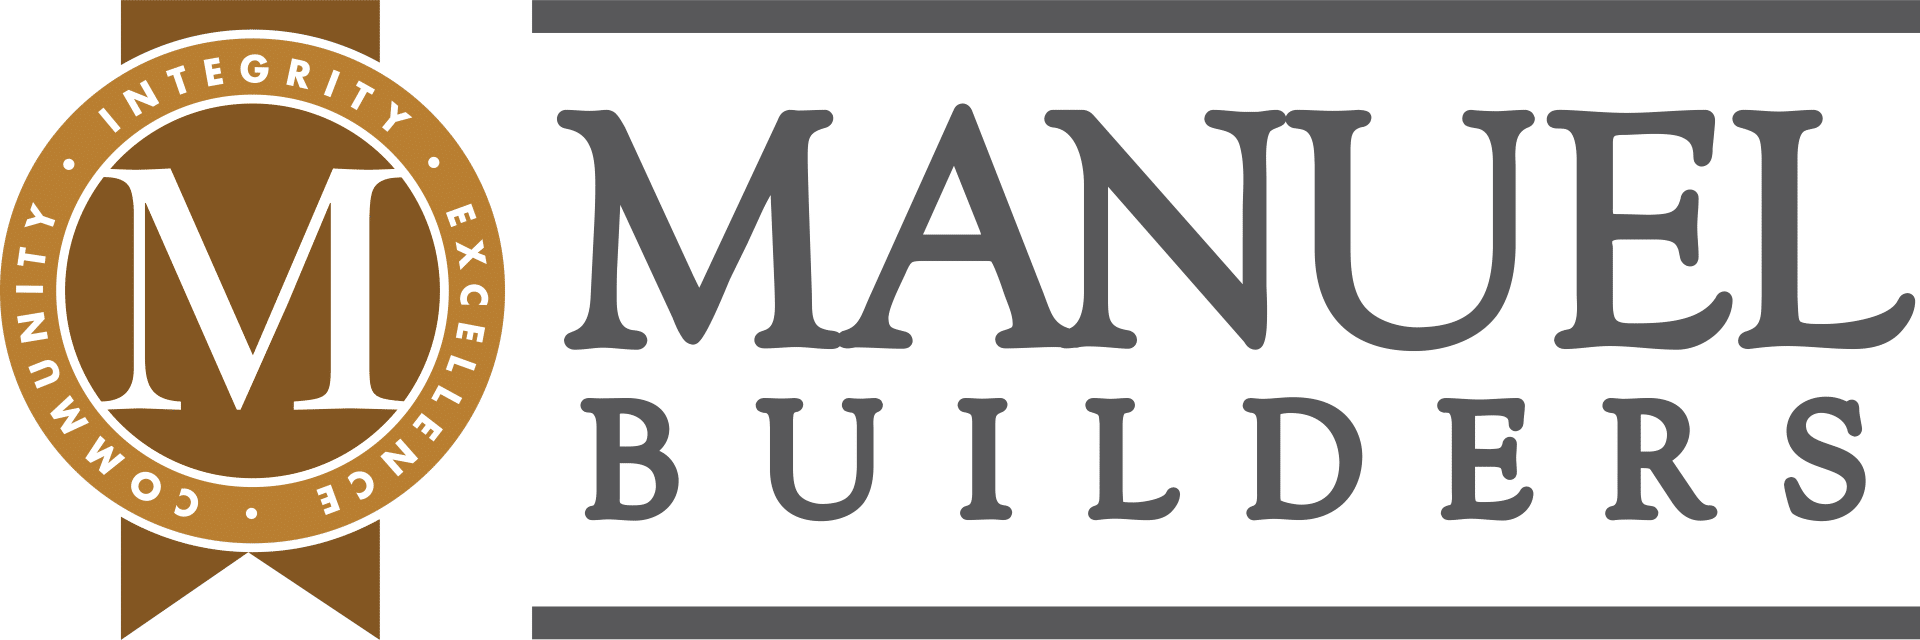 Manual Builders Parade of Homes sponsor logo